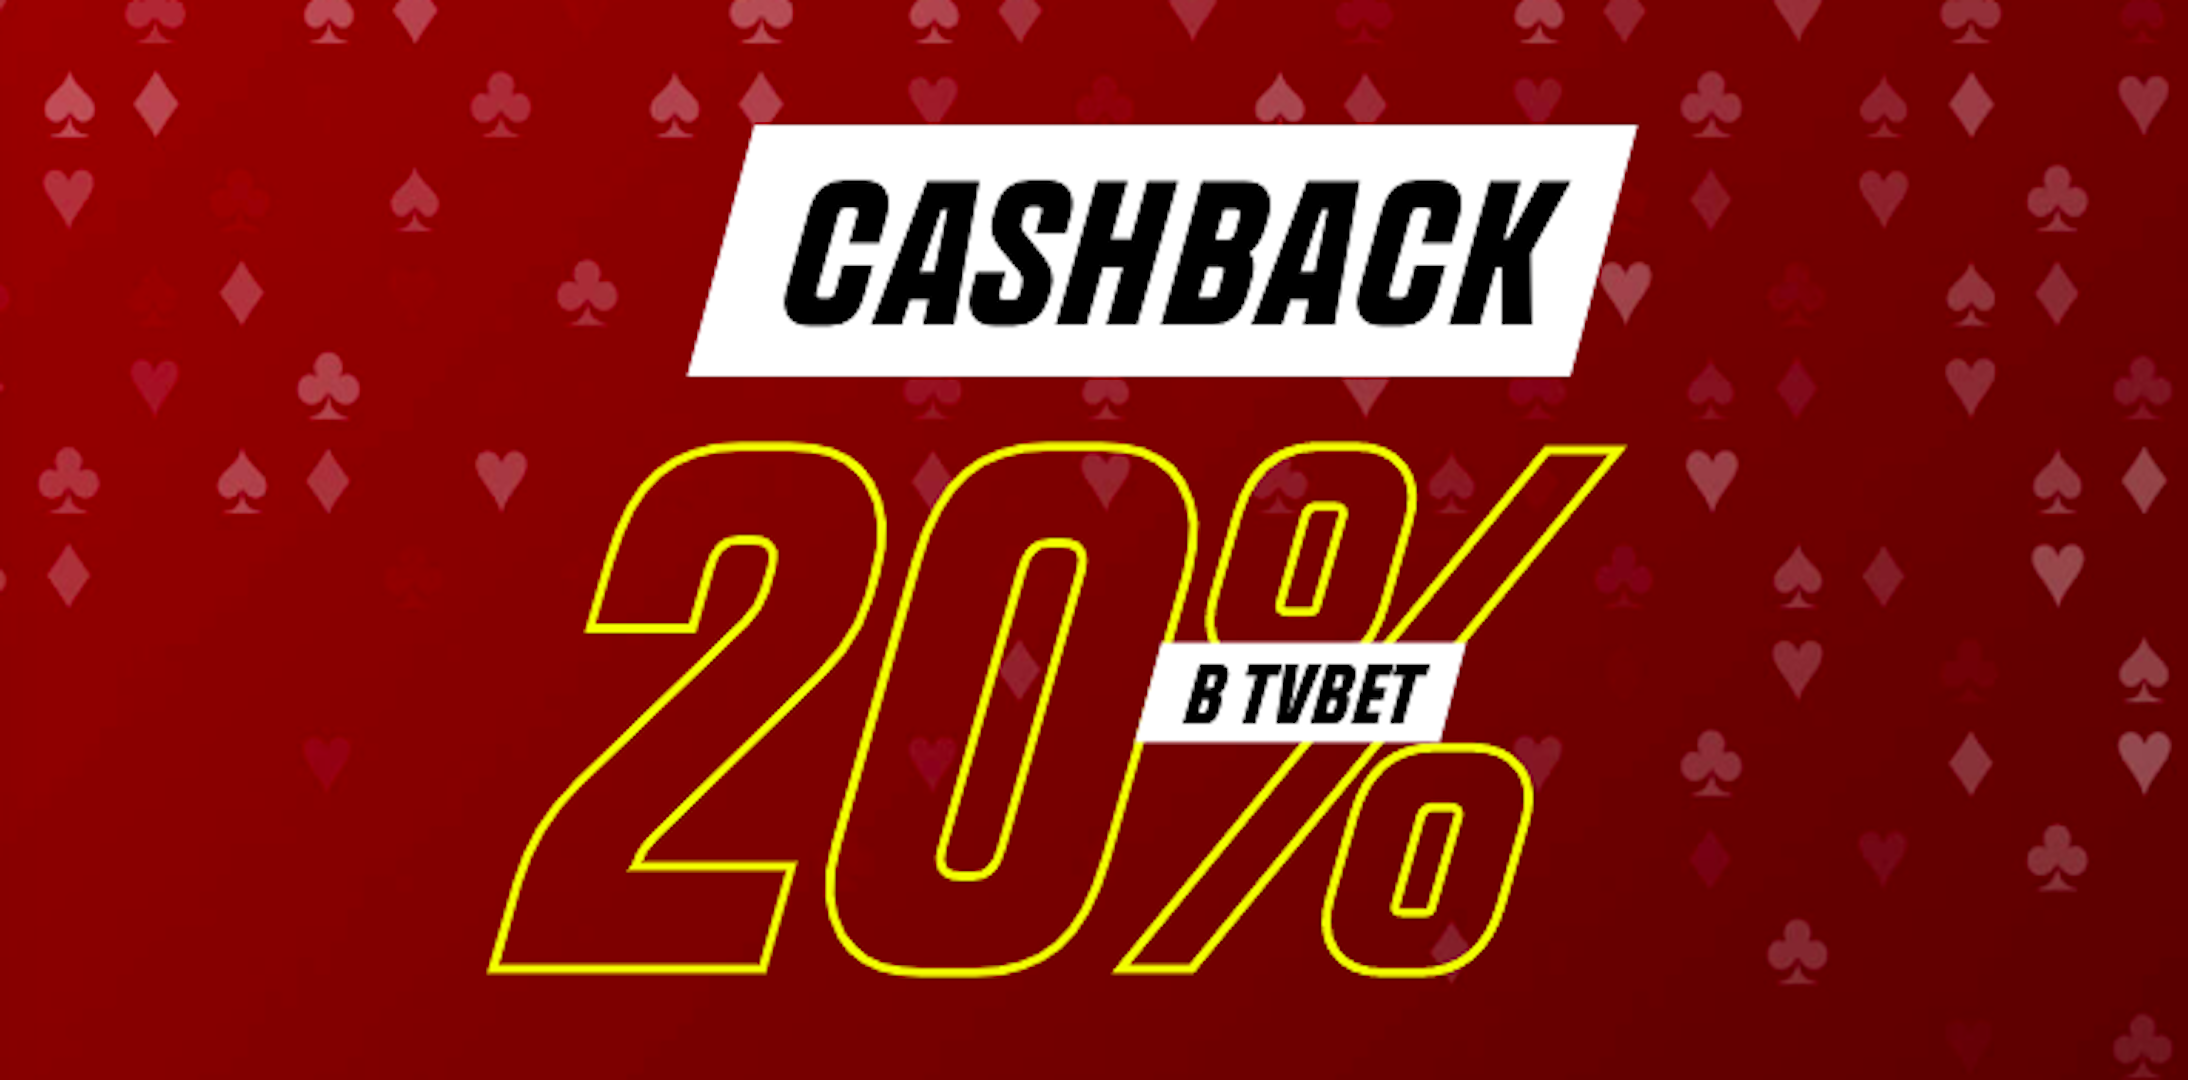 Parimatch Cashback TVBet